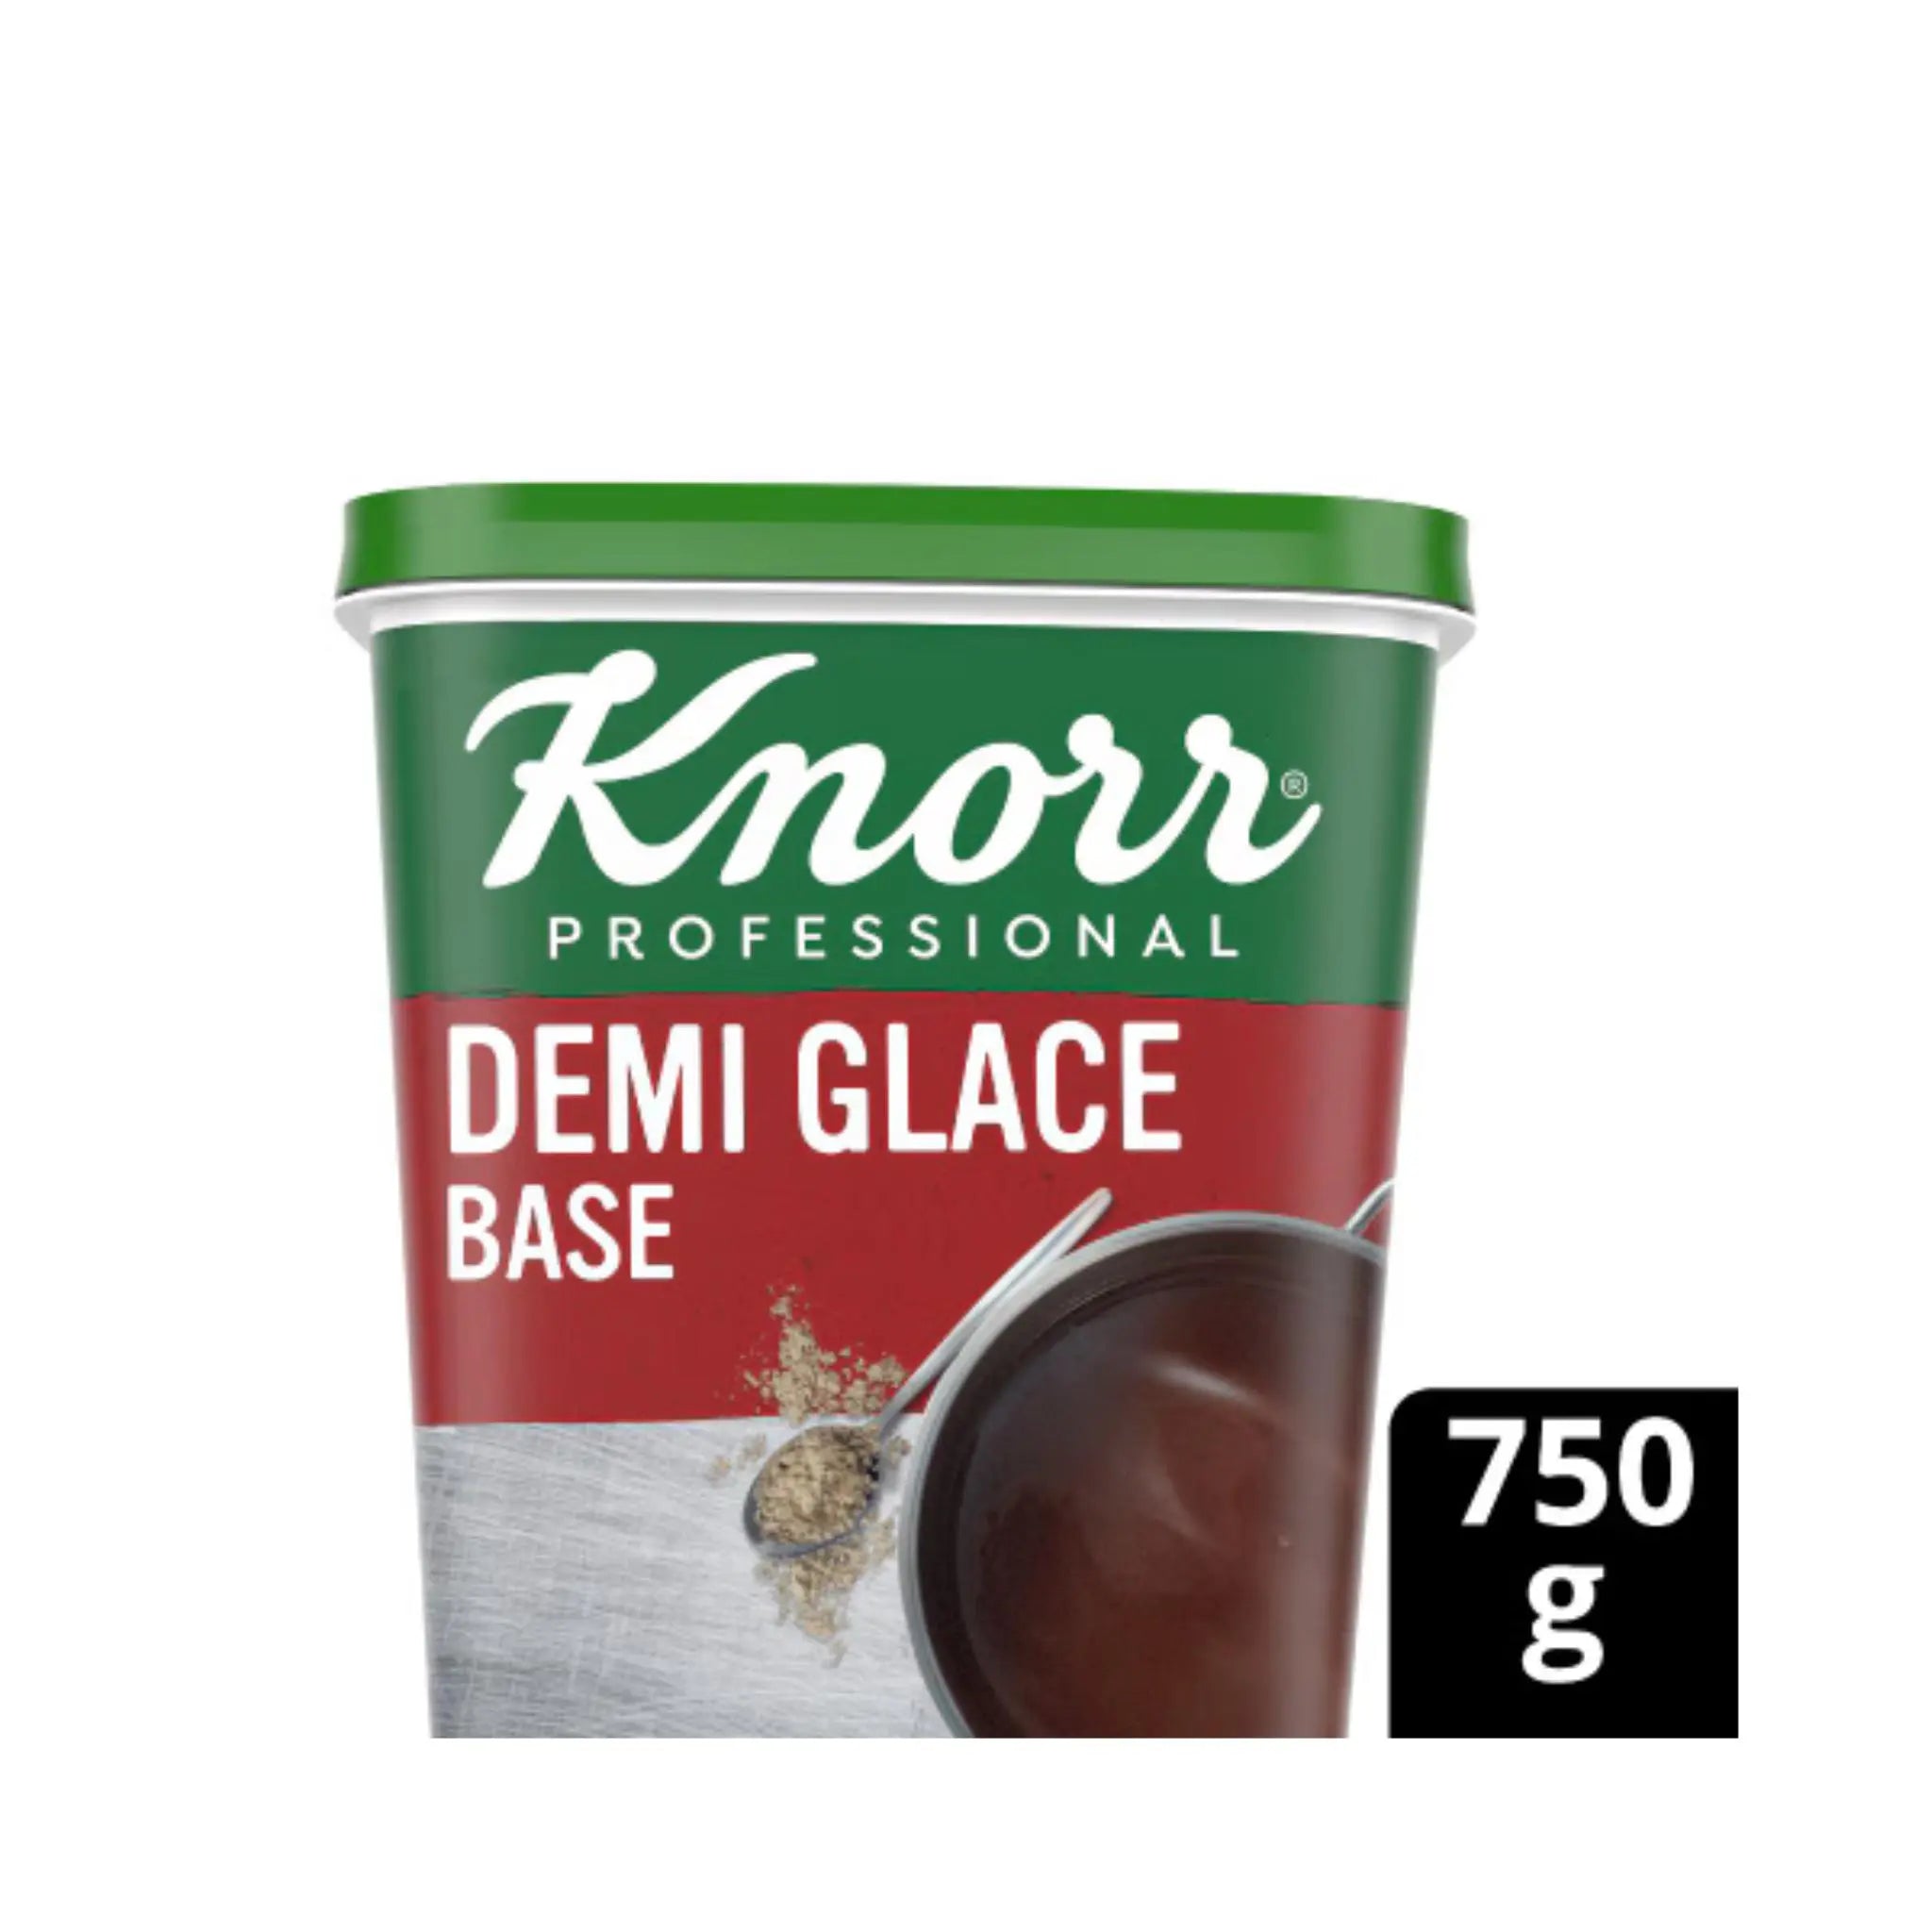 Knorr Professional Demi Glace Sauce - 6x750g (1 carton) - Marino.AE